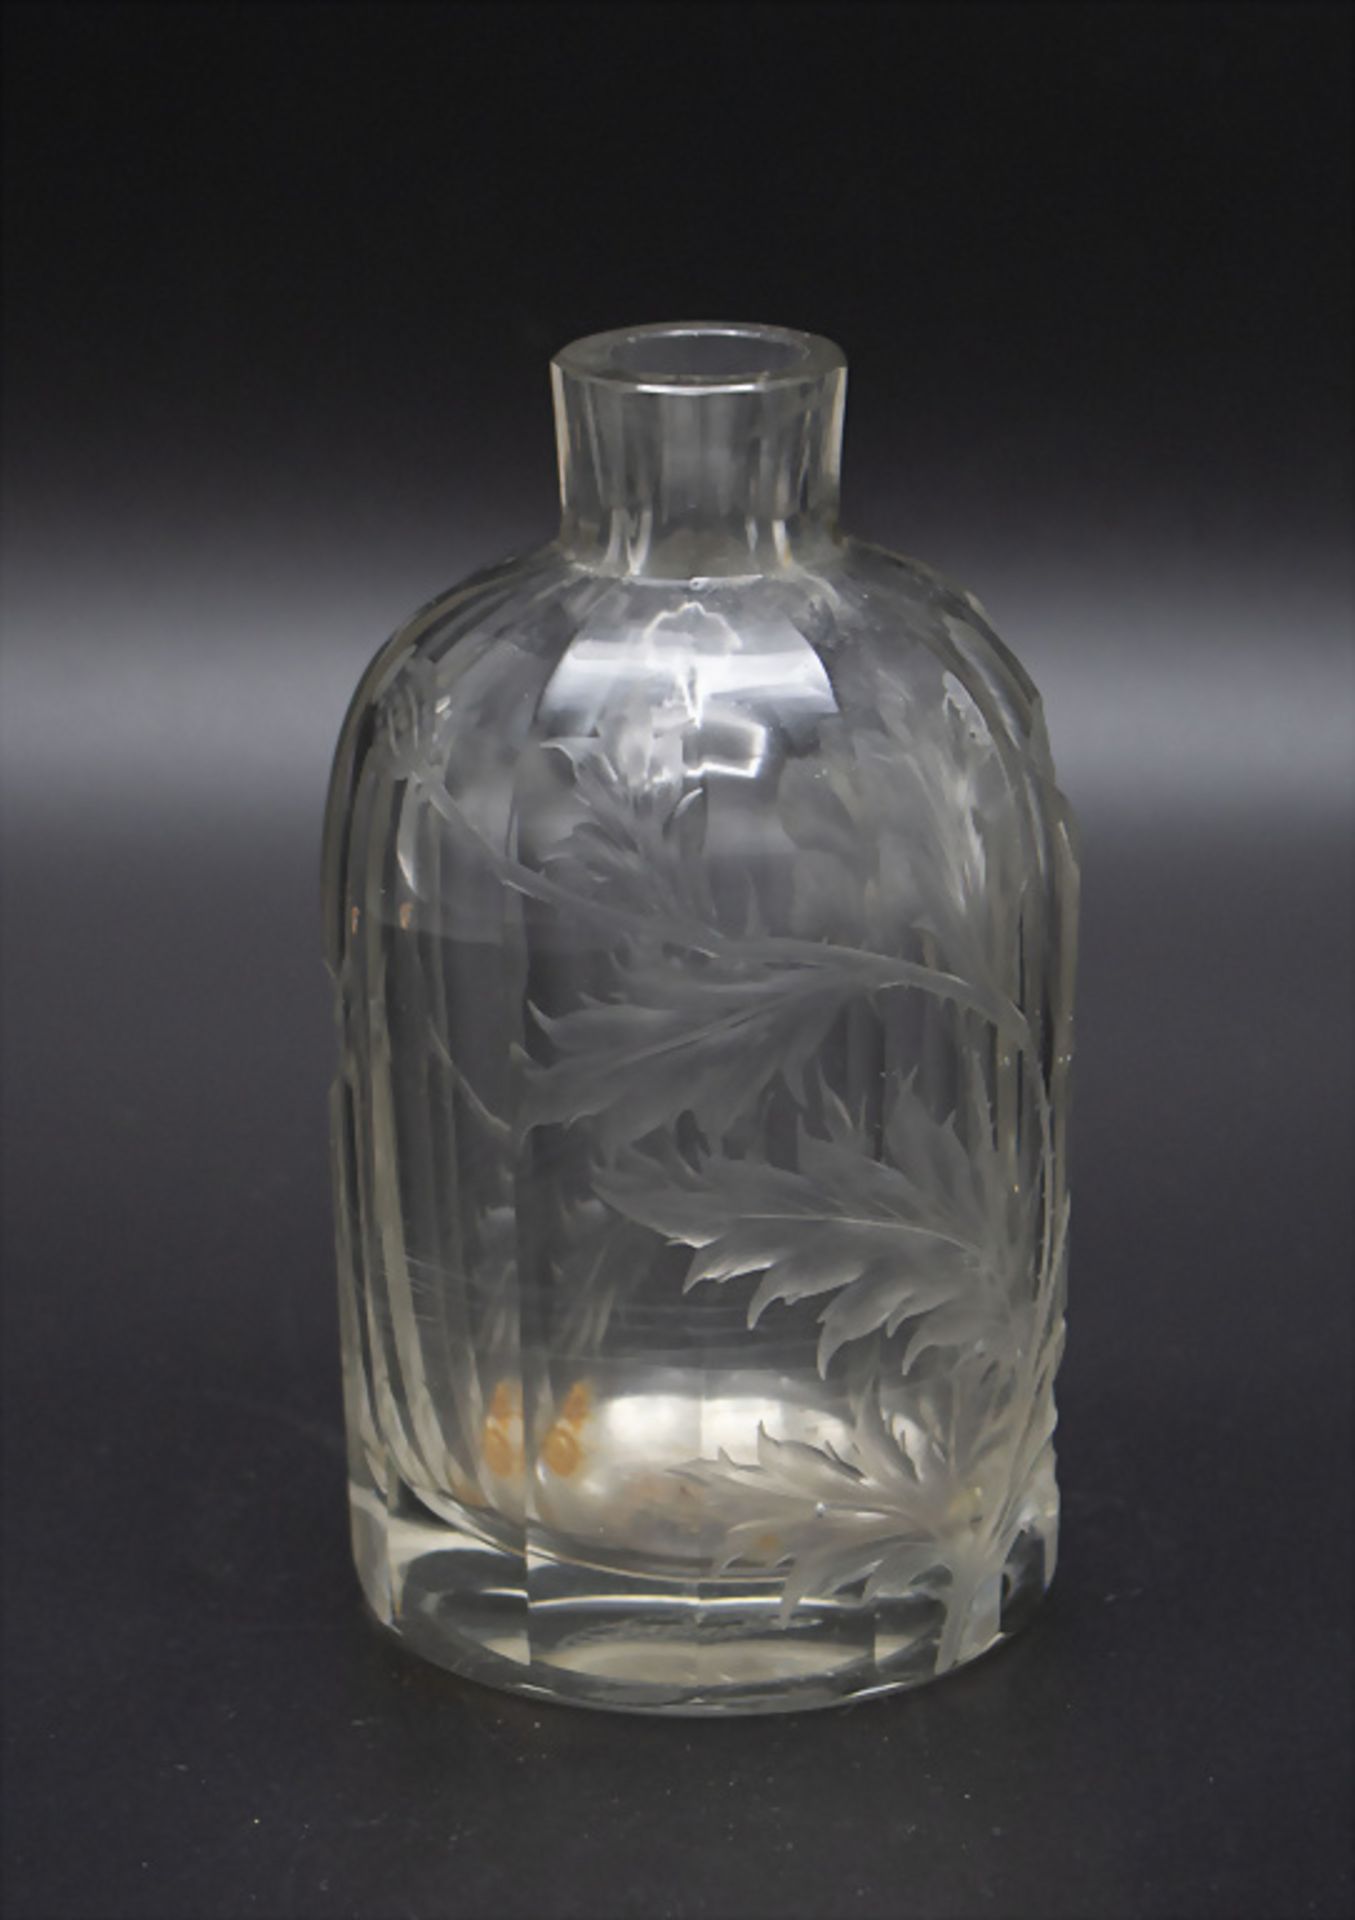 Jugendstil Glasflasche mit Mohnblume / An Art Nouveau glass bottle with poppy flower, Ludwig ... - Image 2 of 3